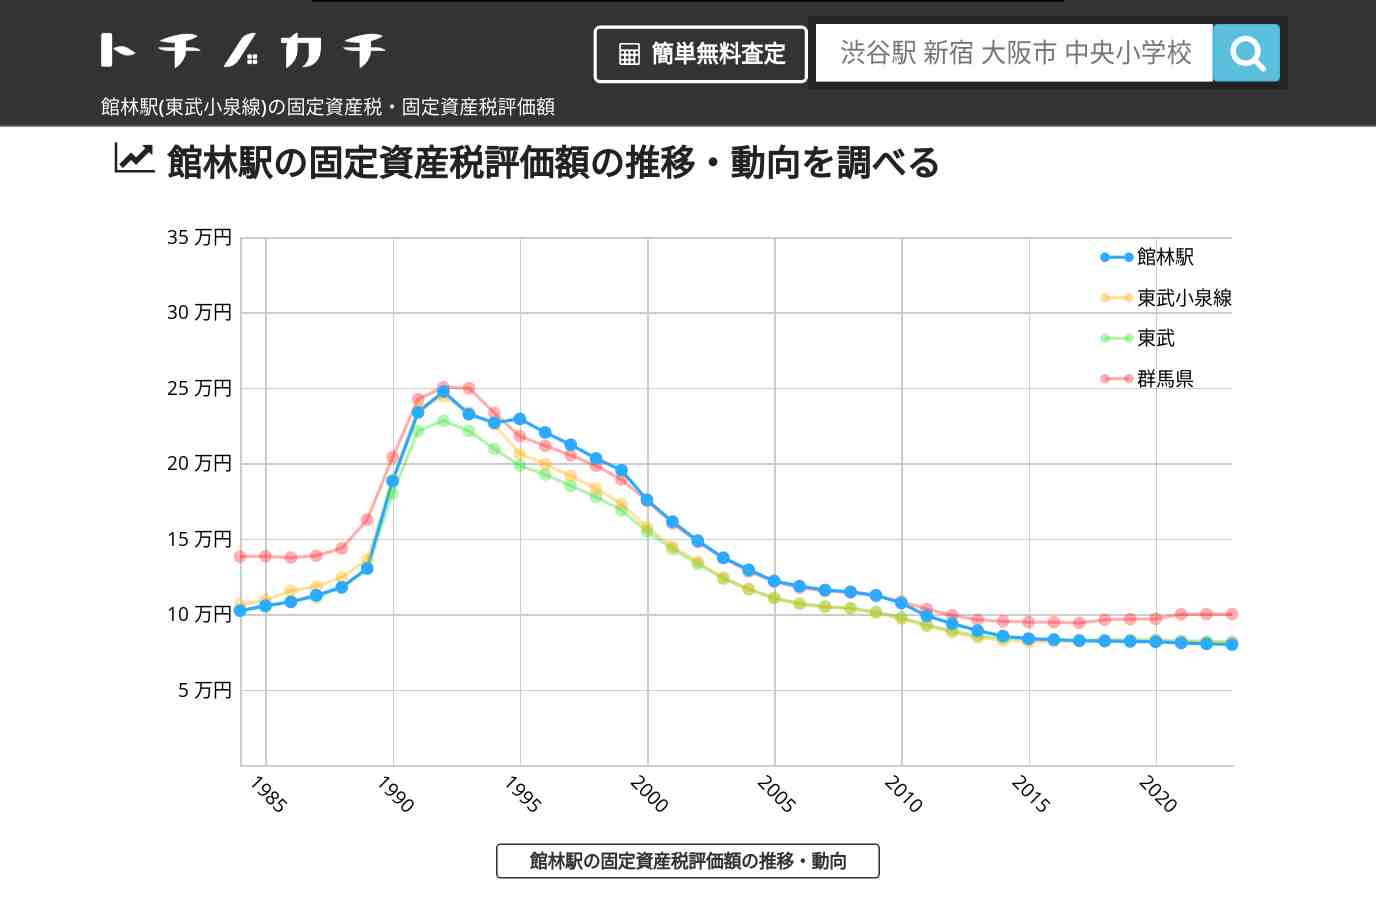 館林駅(東武小泉線)の固定資産税・固定資産税評価額 | トチノカチ